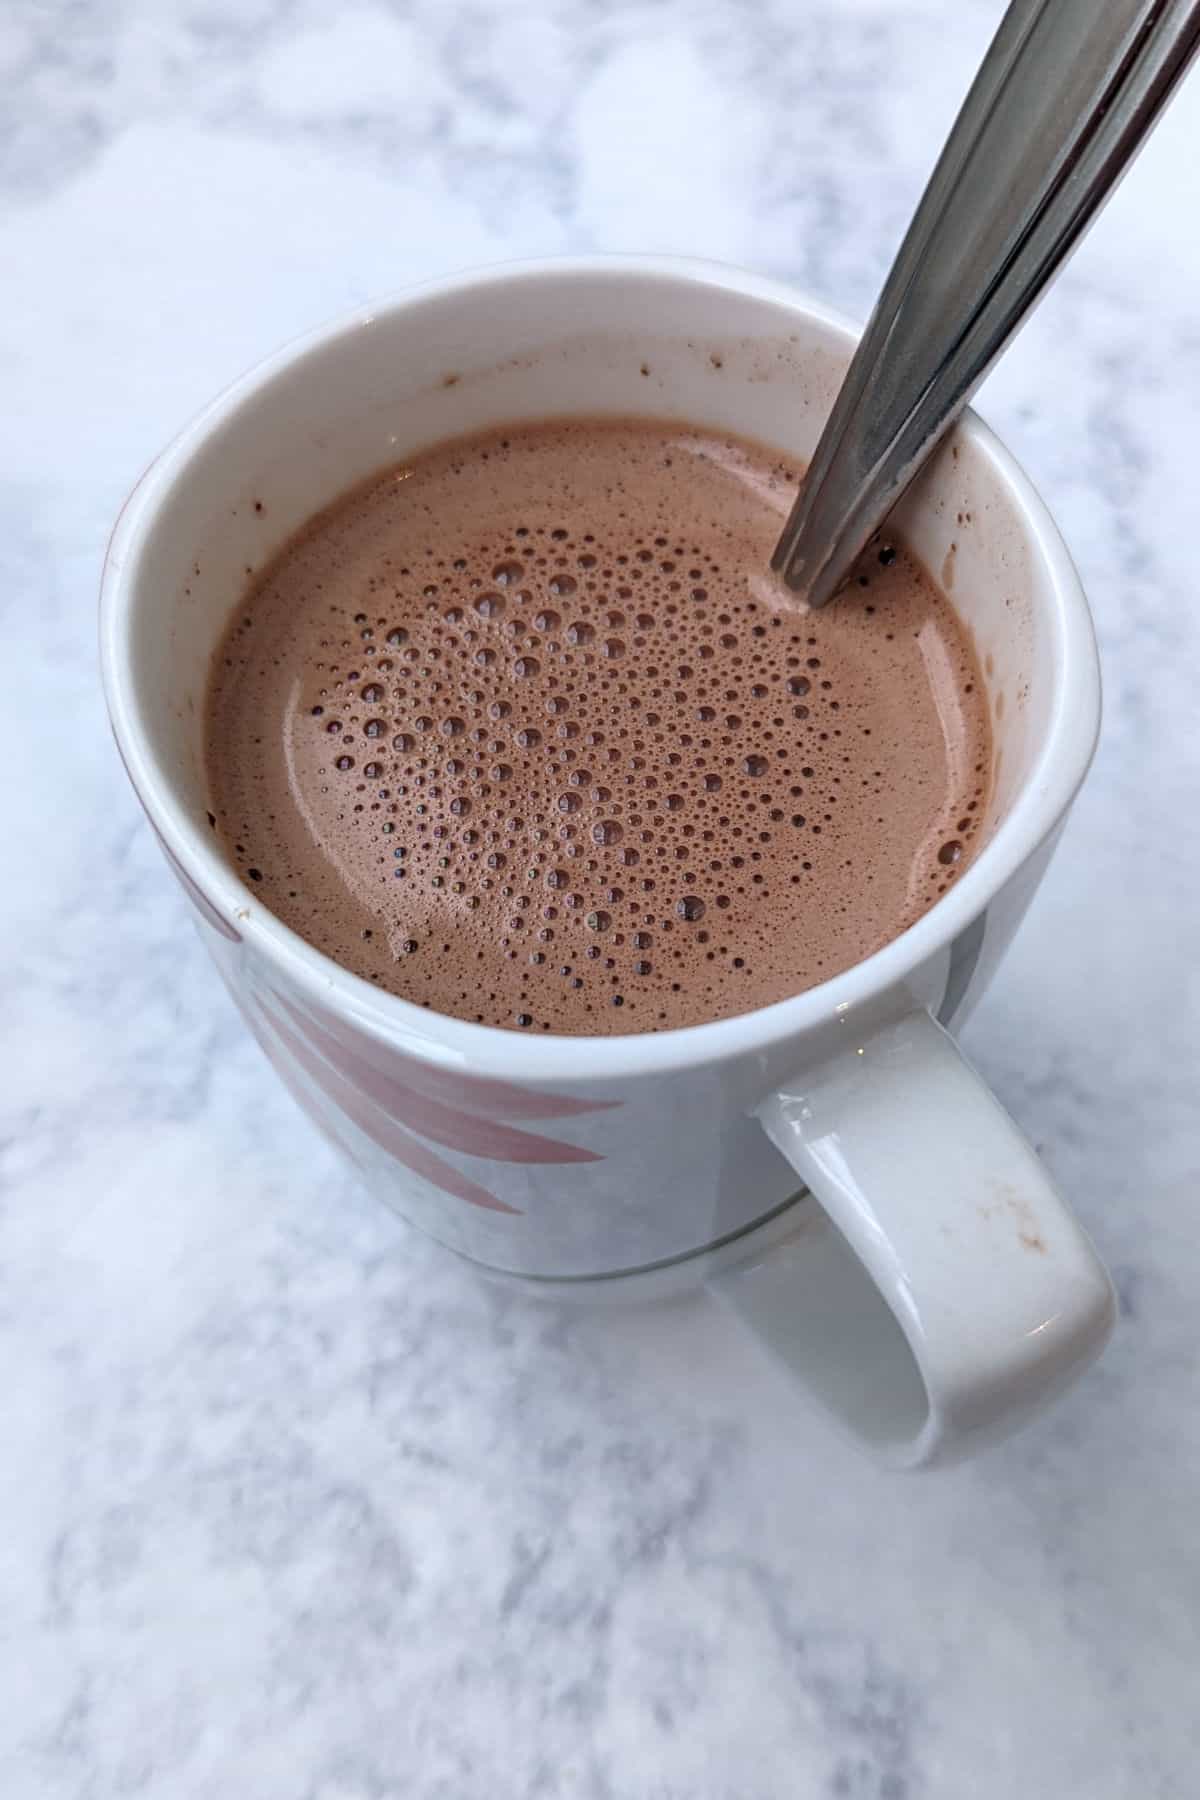 hot chocolate, heated and stirred